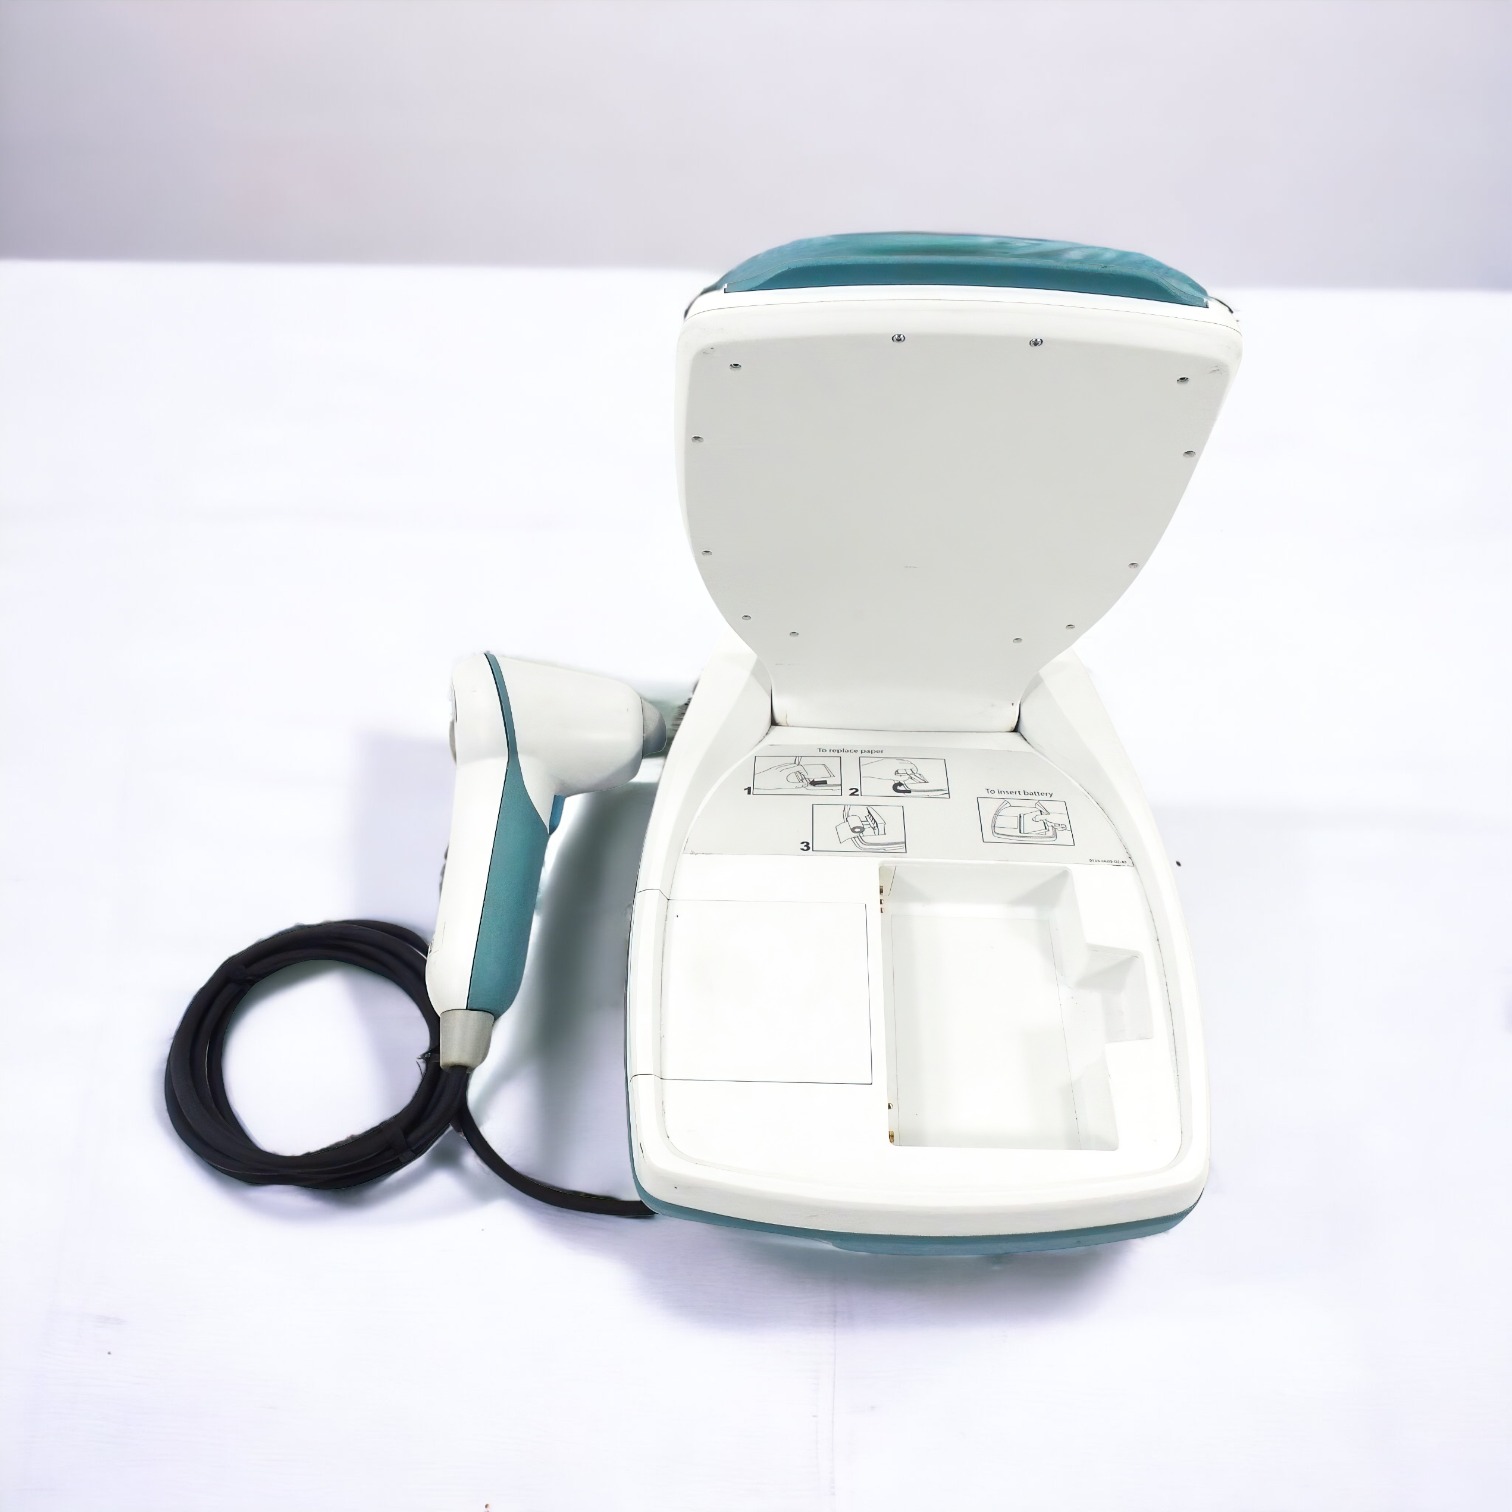 Scanner vésical portatif - BladderScan® BVI 6400 - Verathon